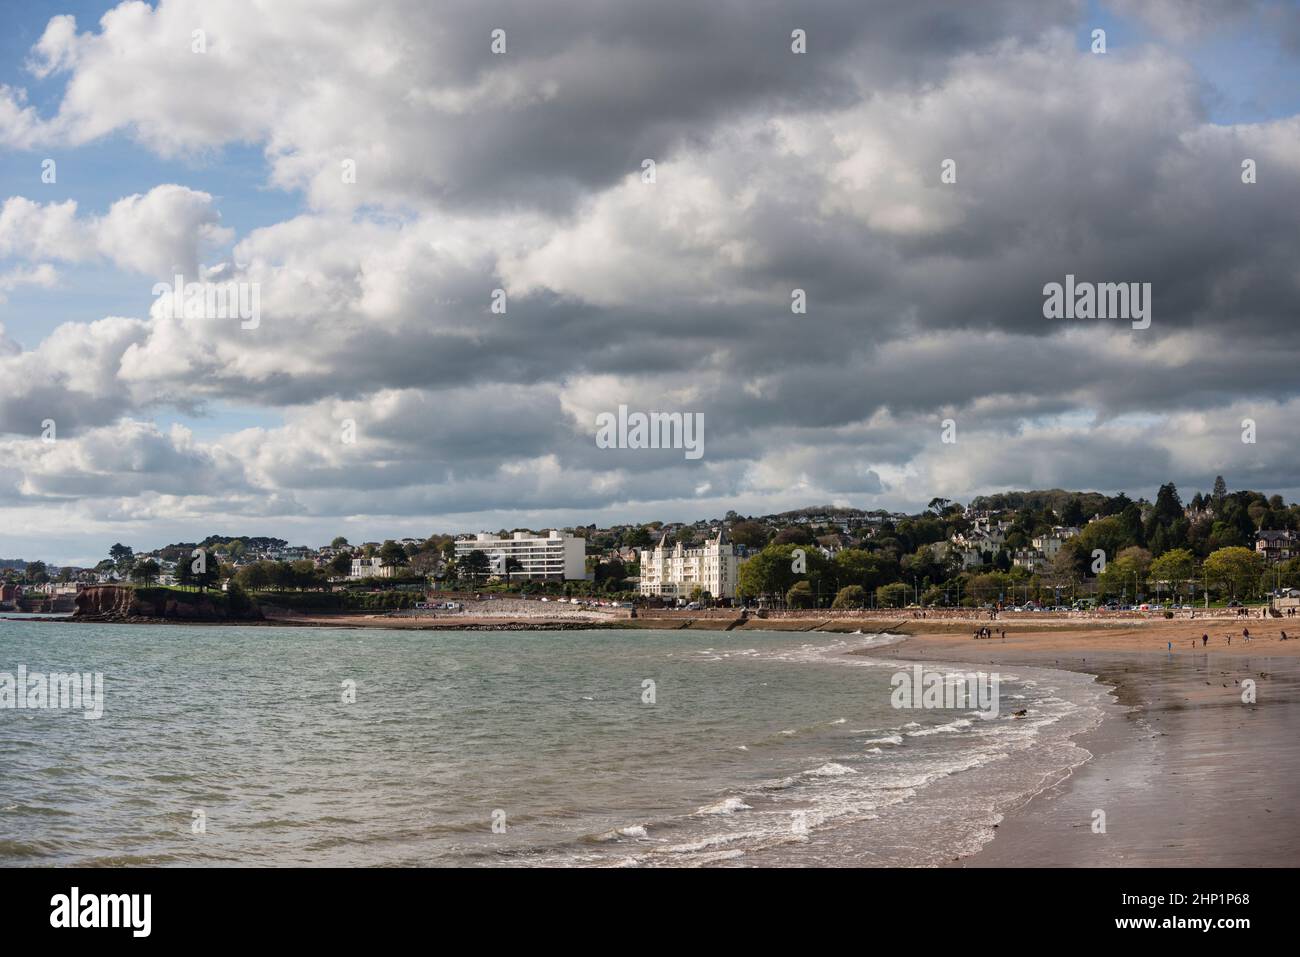 View of people on beach, nice weather, Torquay Seafront, Devon, UK Stock Photo